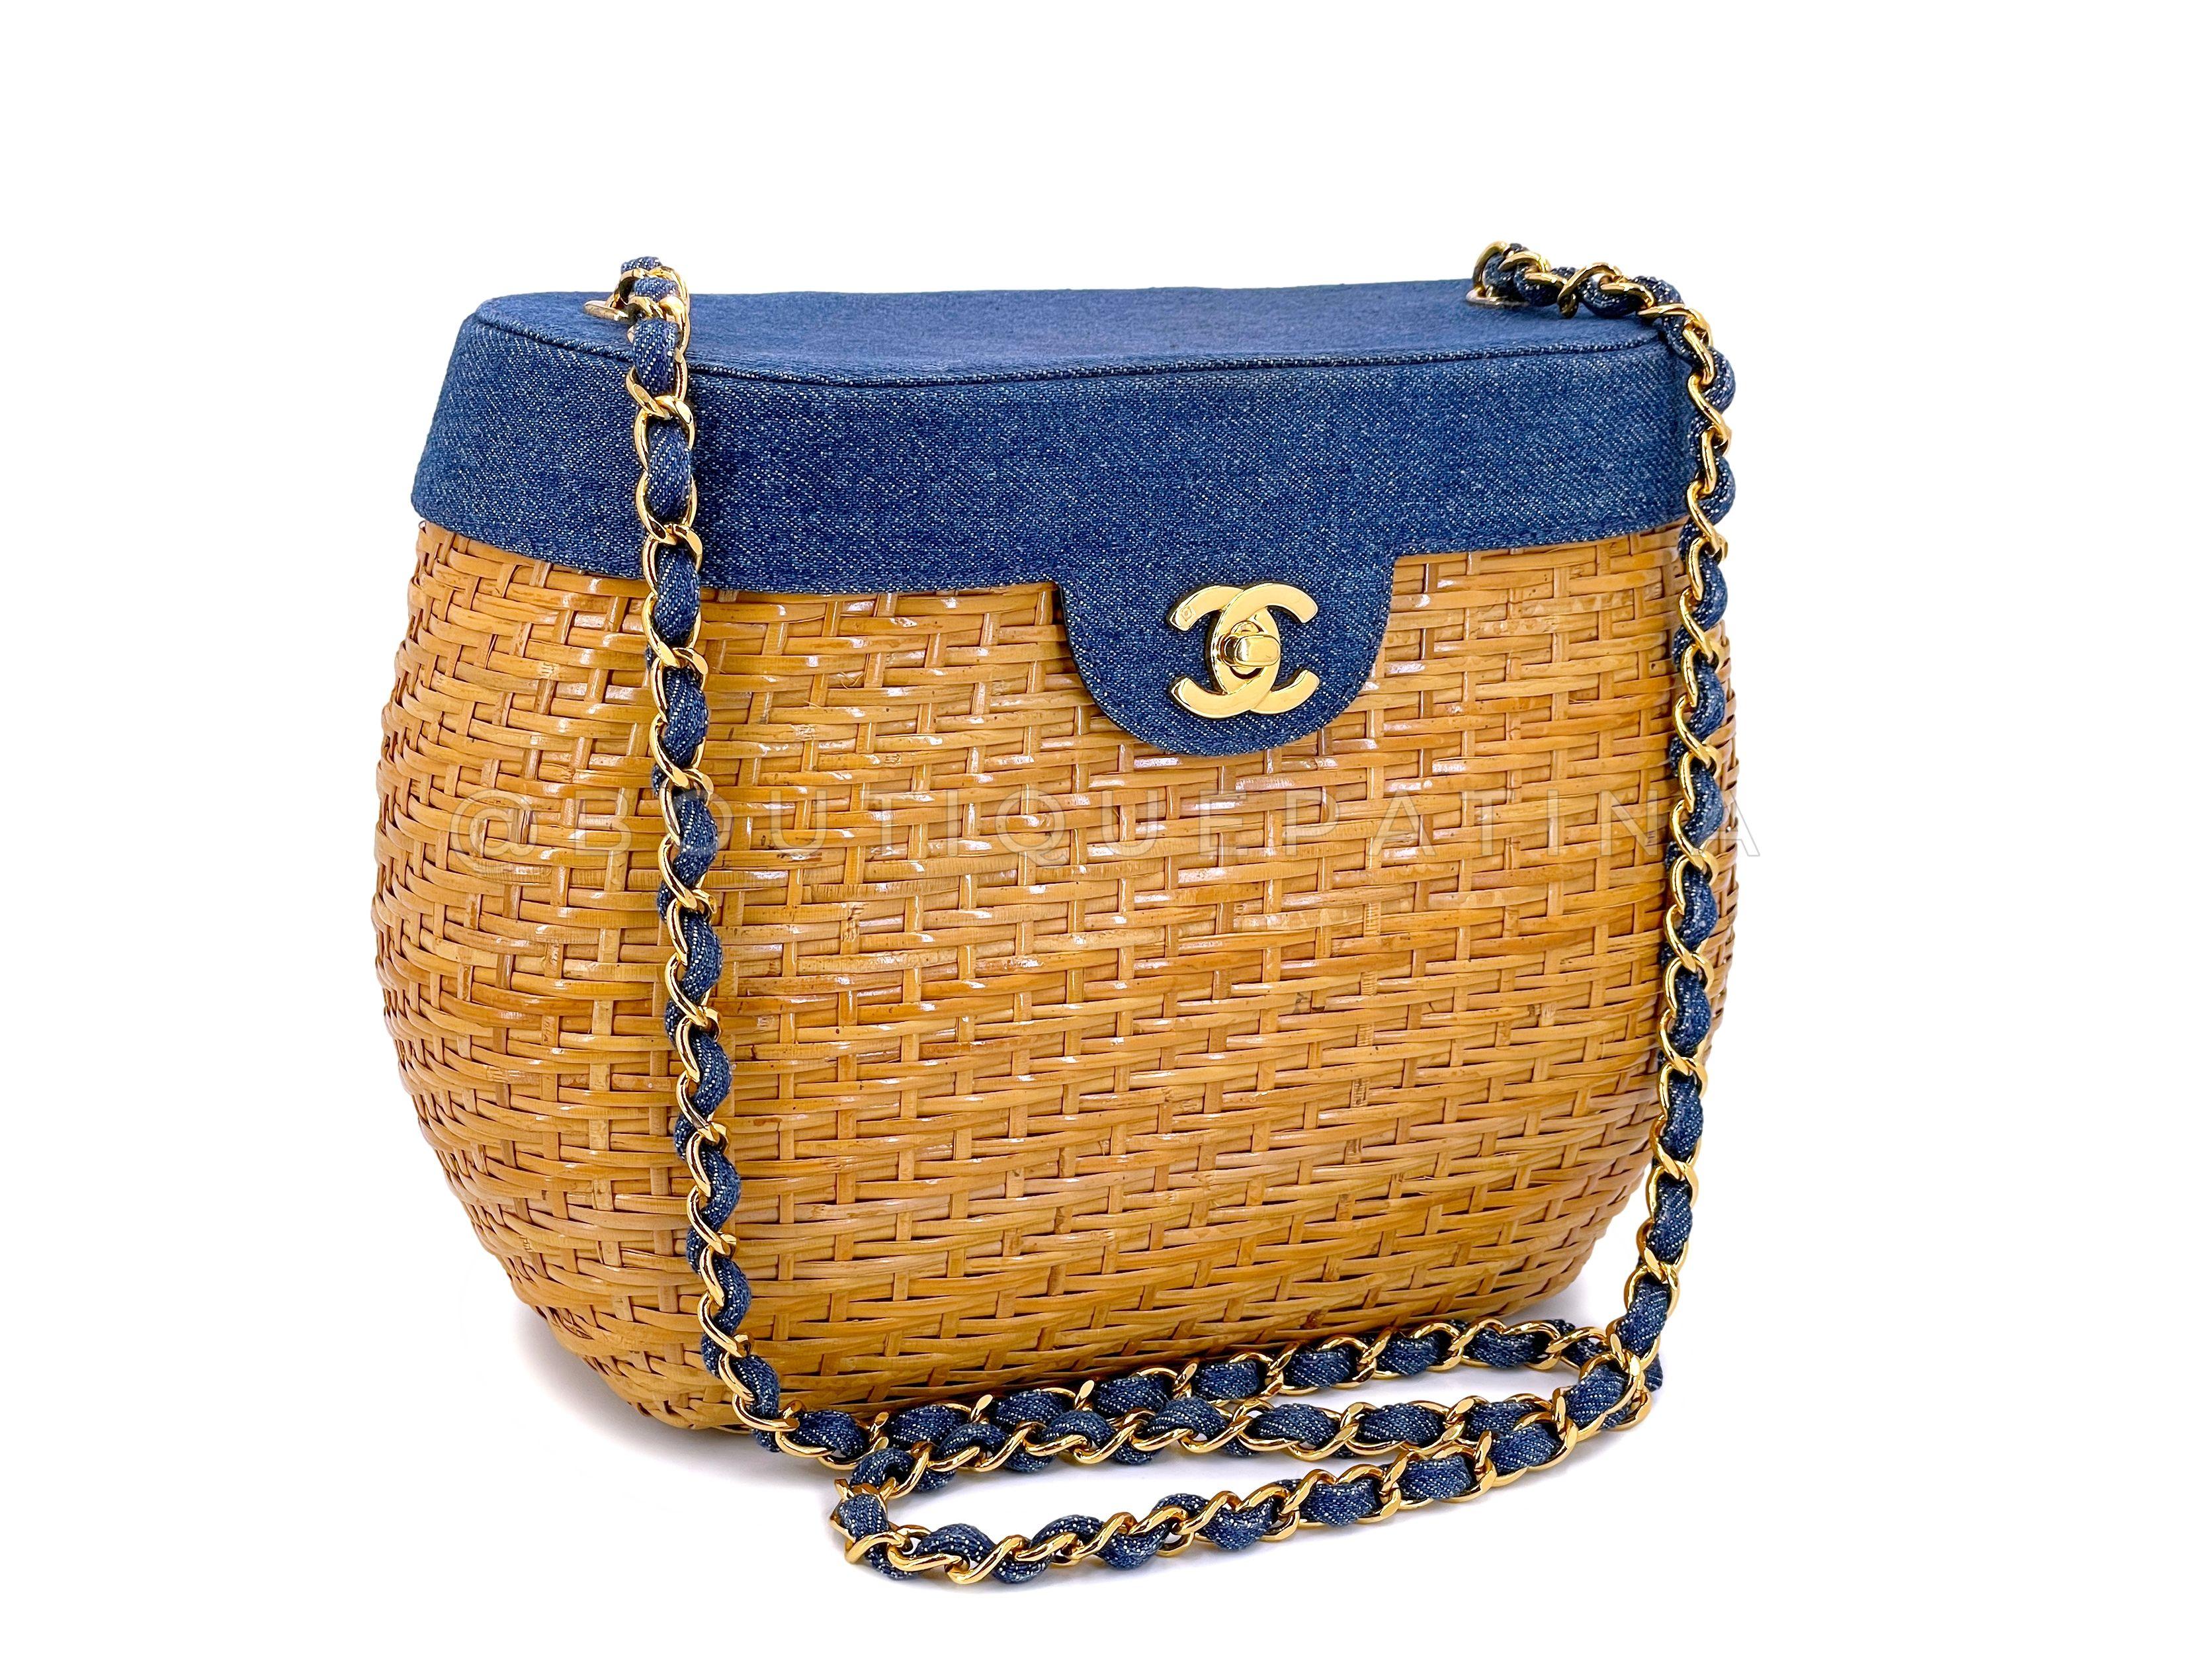 Chanel Tan Wicker Rattan Basket Yellow Leather Classic Flap Shoulder Bag